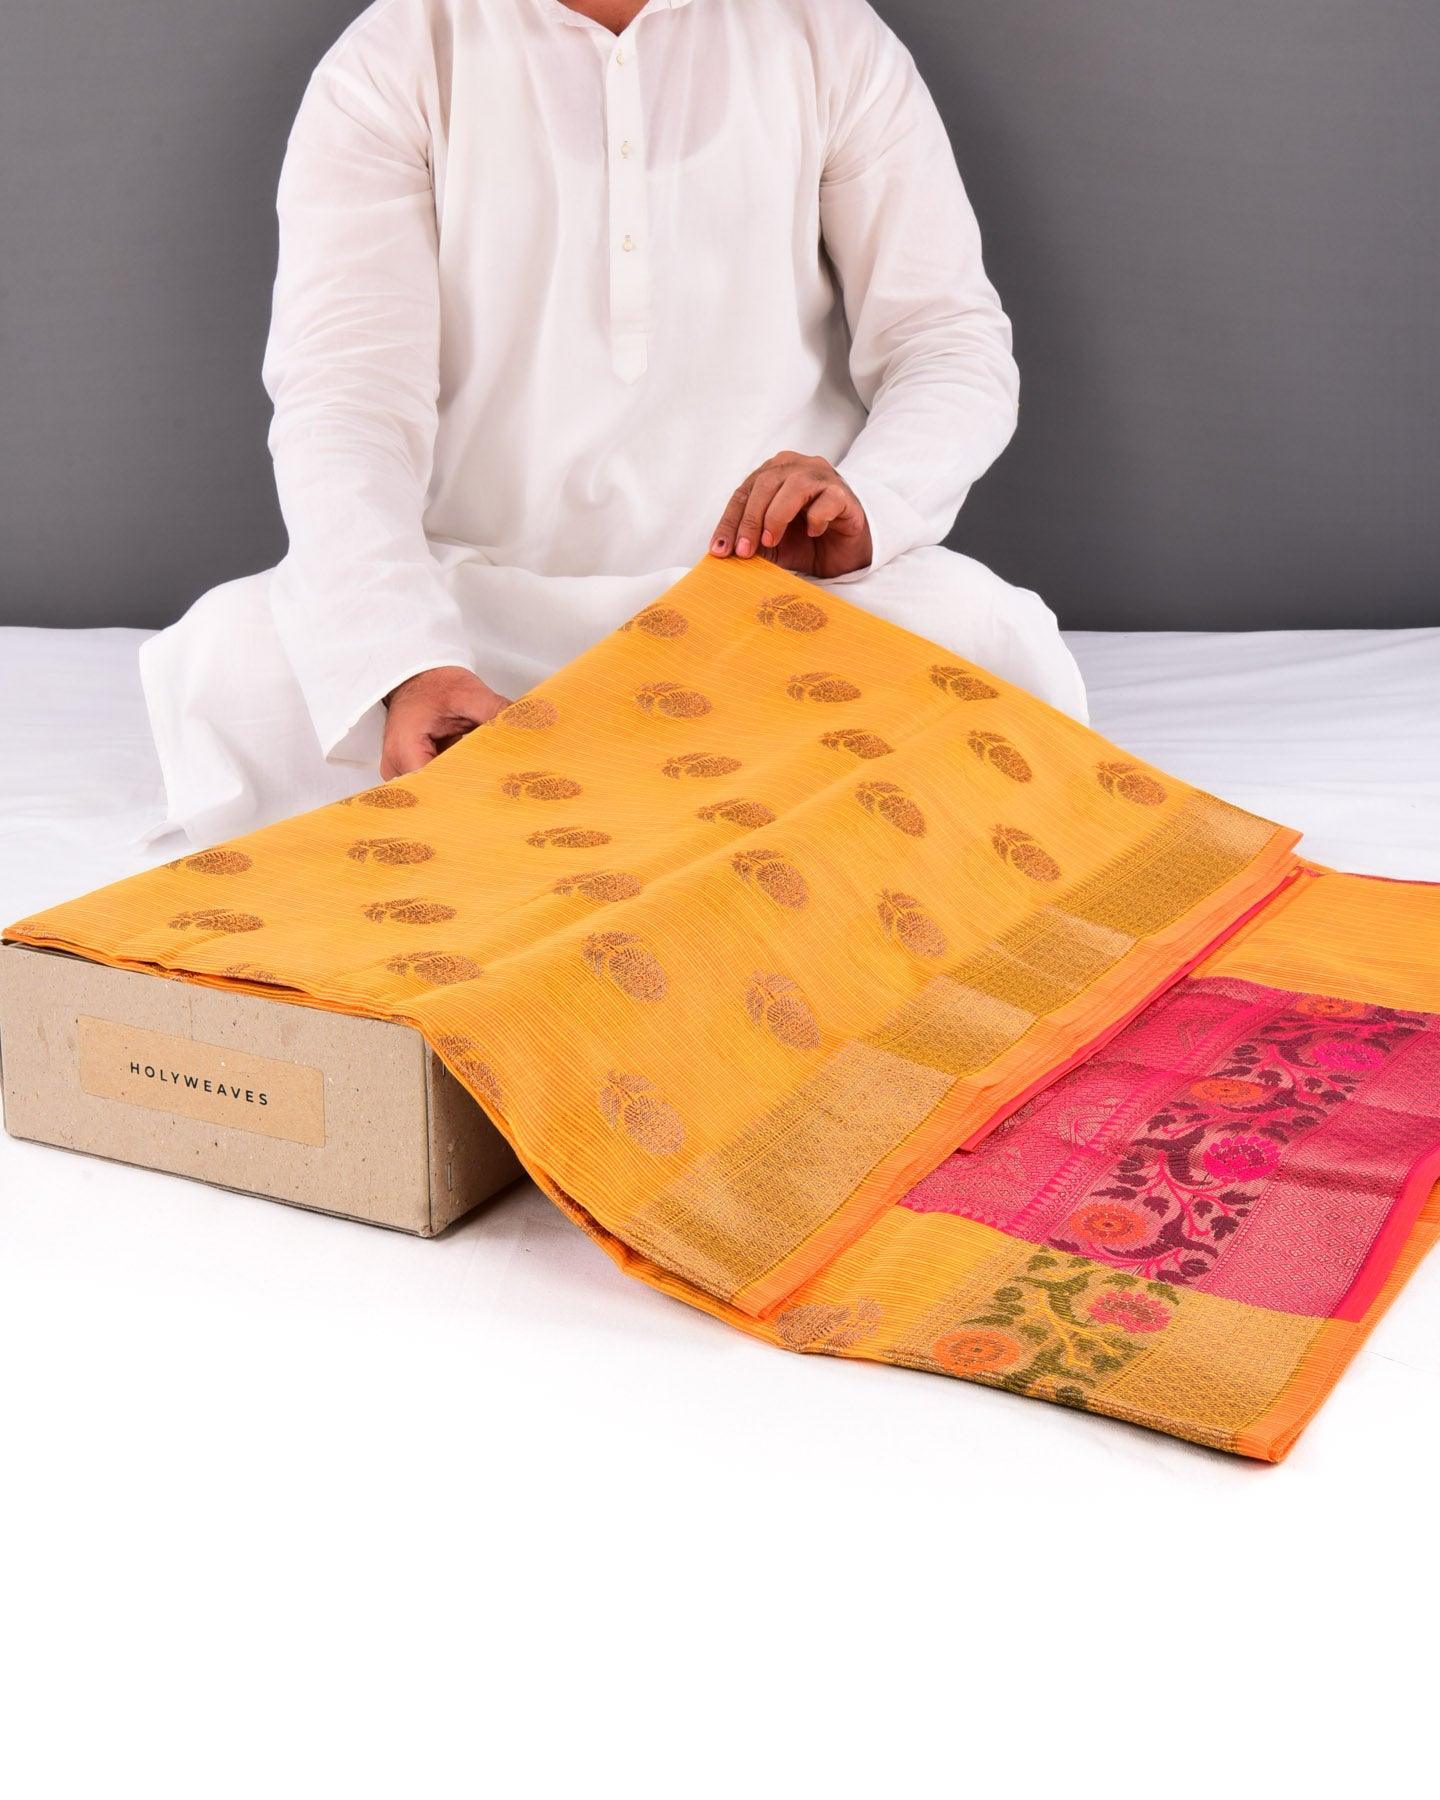 Marigold Yellow Banarasi Kota Check Texture Antique Zari Buta Cutwork Brocade Woven Cotton Silk Saree with Meena Bel Brocade Border - By HolyWeaves, Benares